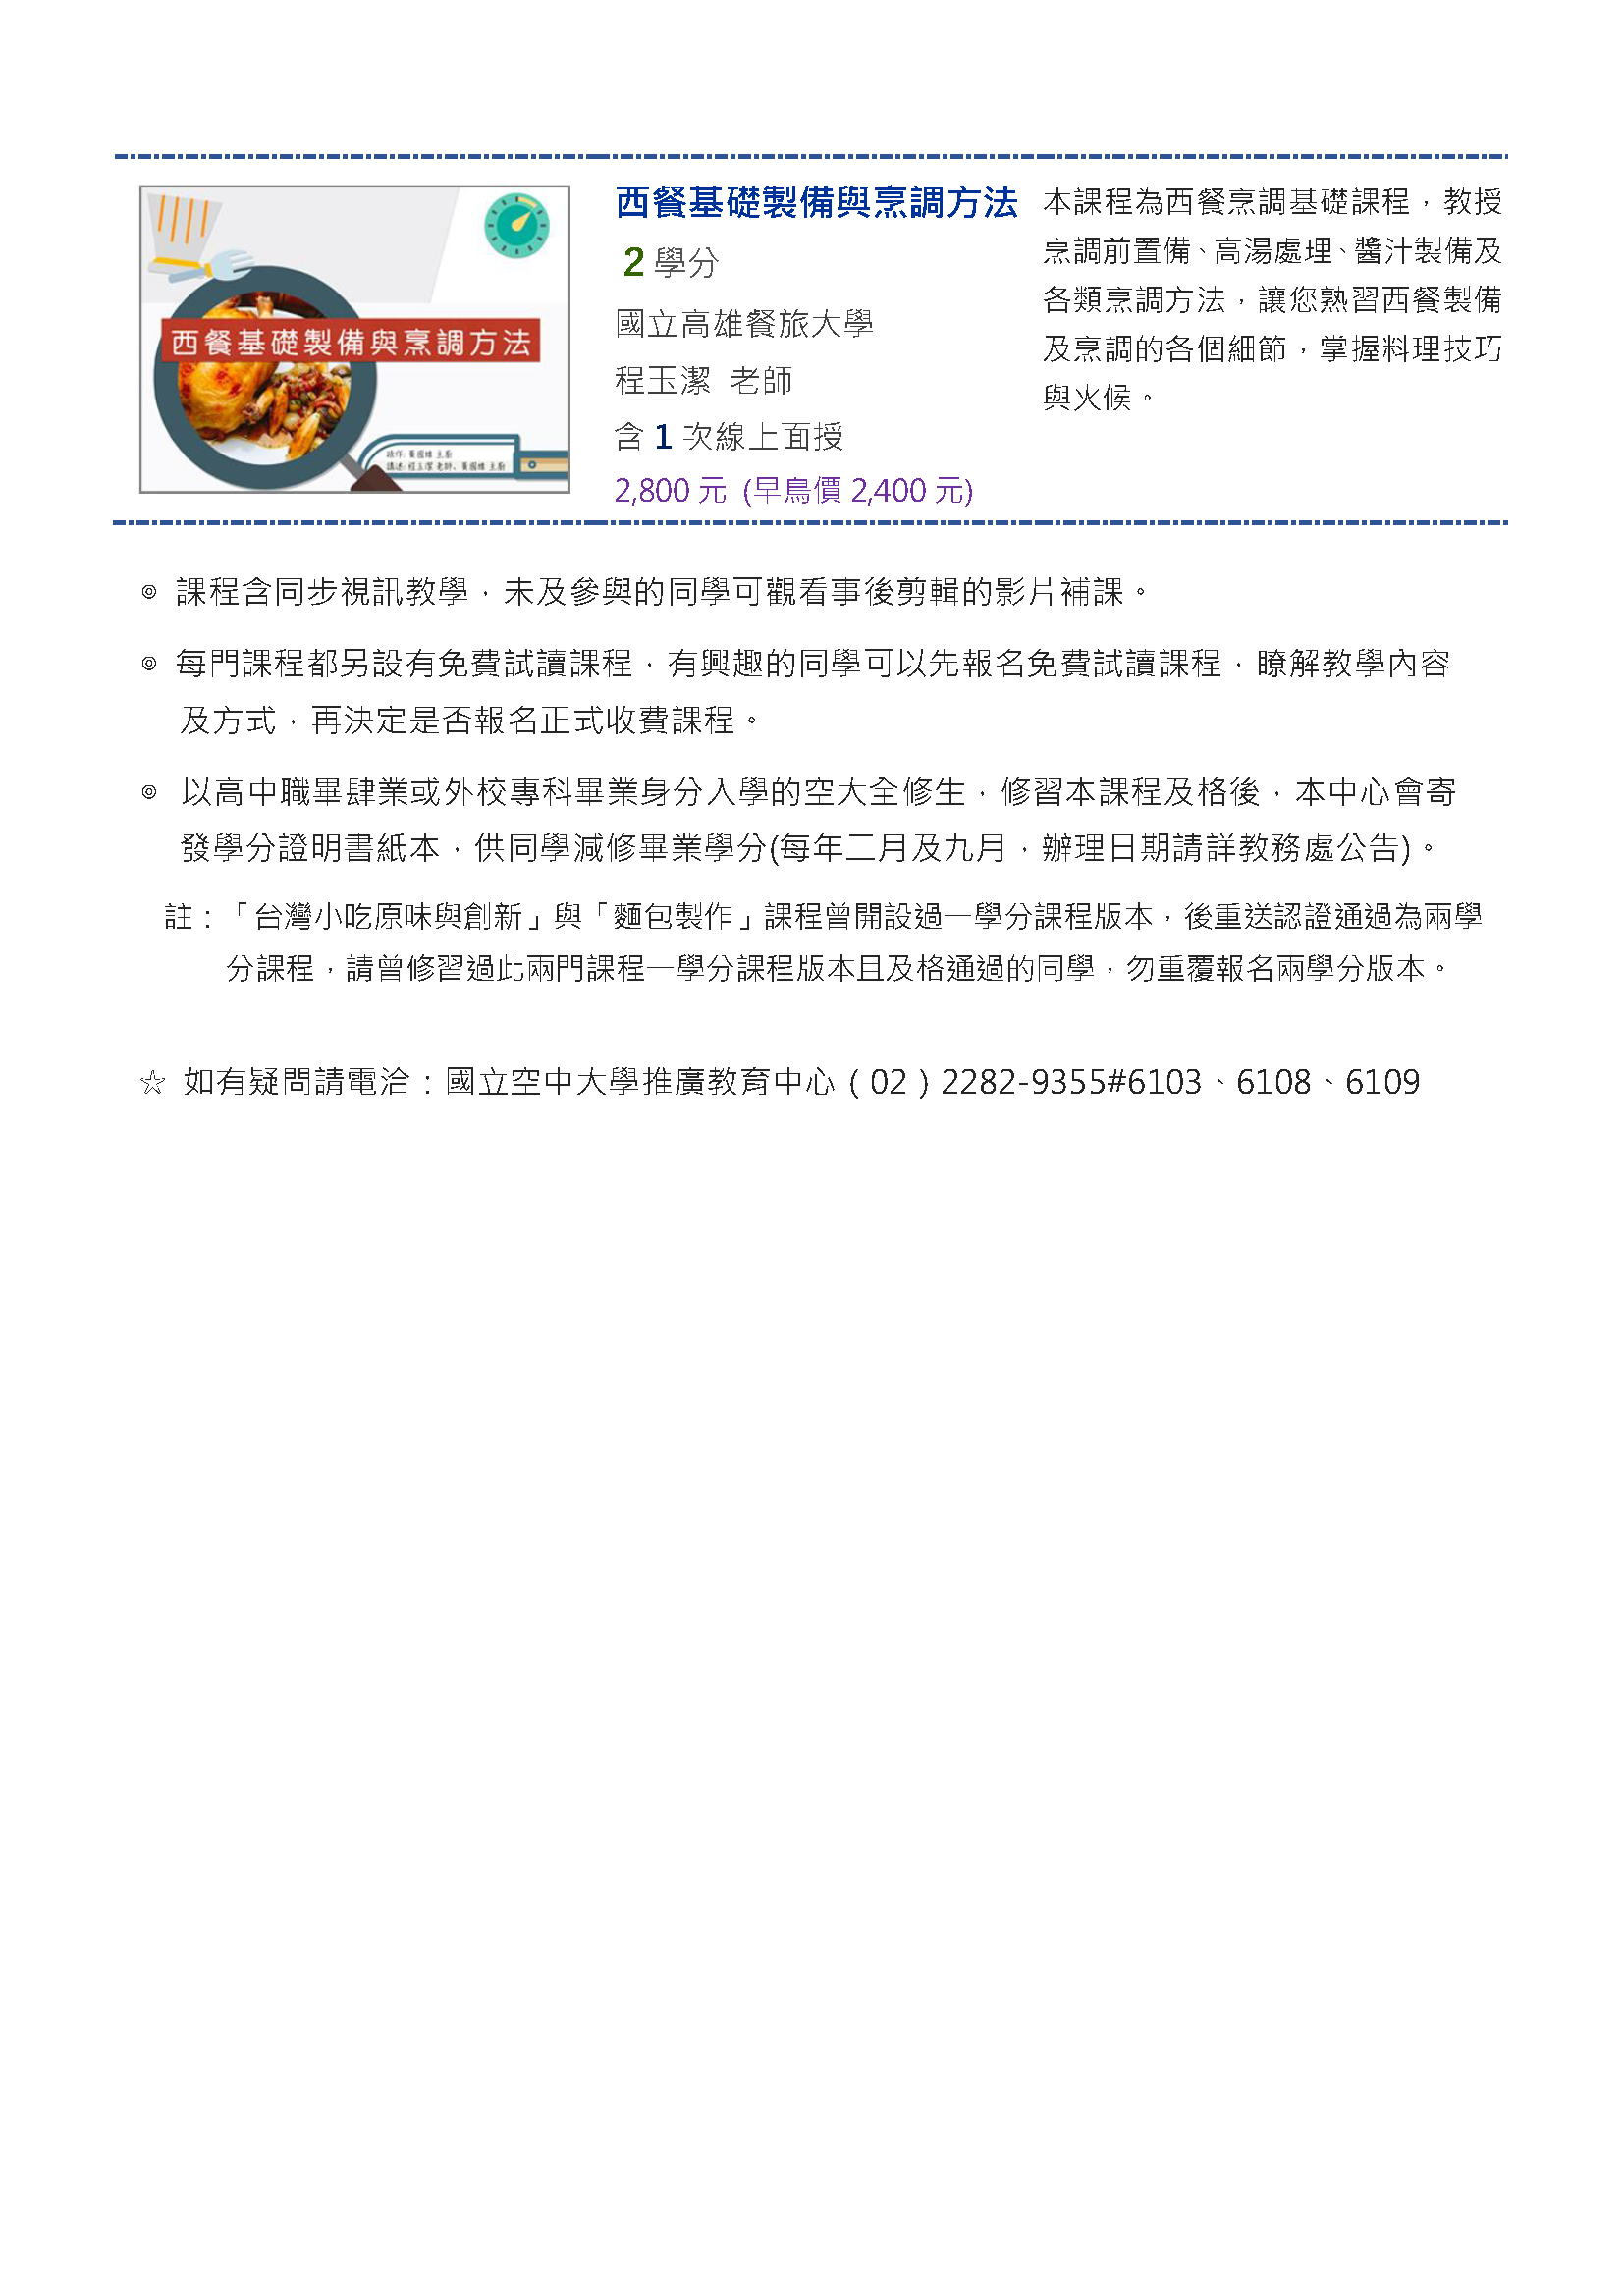 【TaiwanLIFE 台灣全民學習平台】113年度第2梯次收費學分班招生公告2